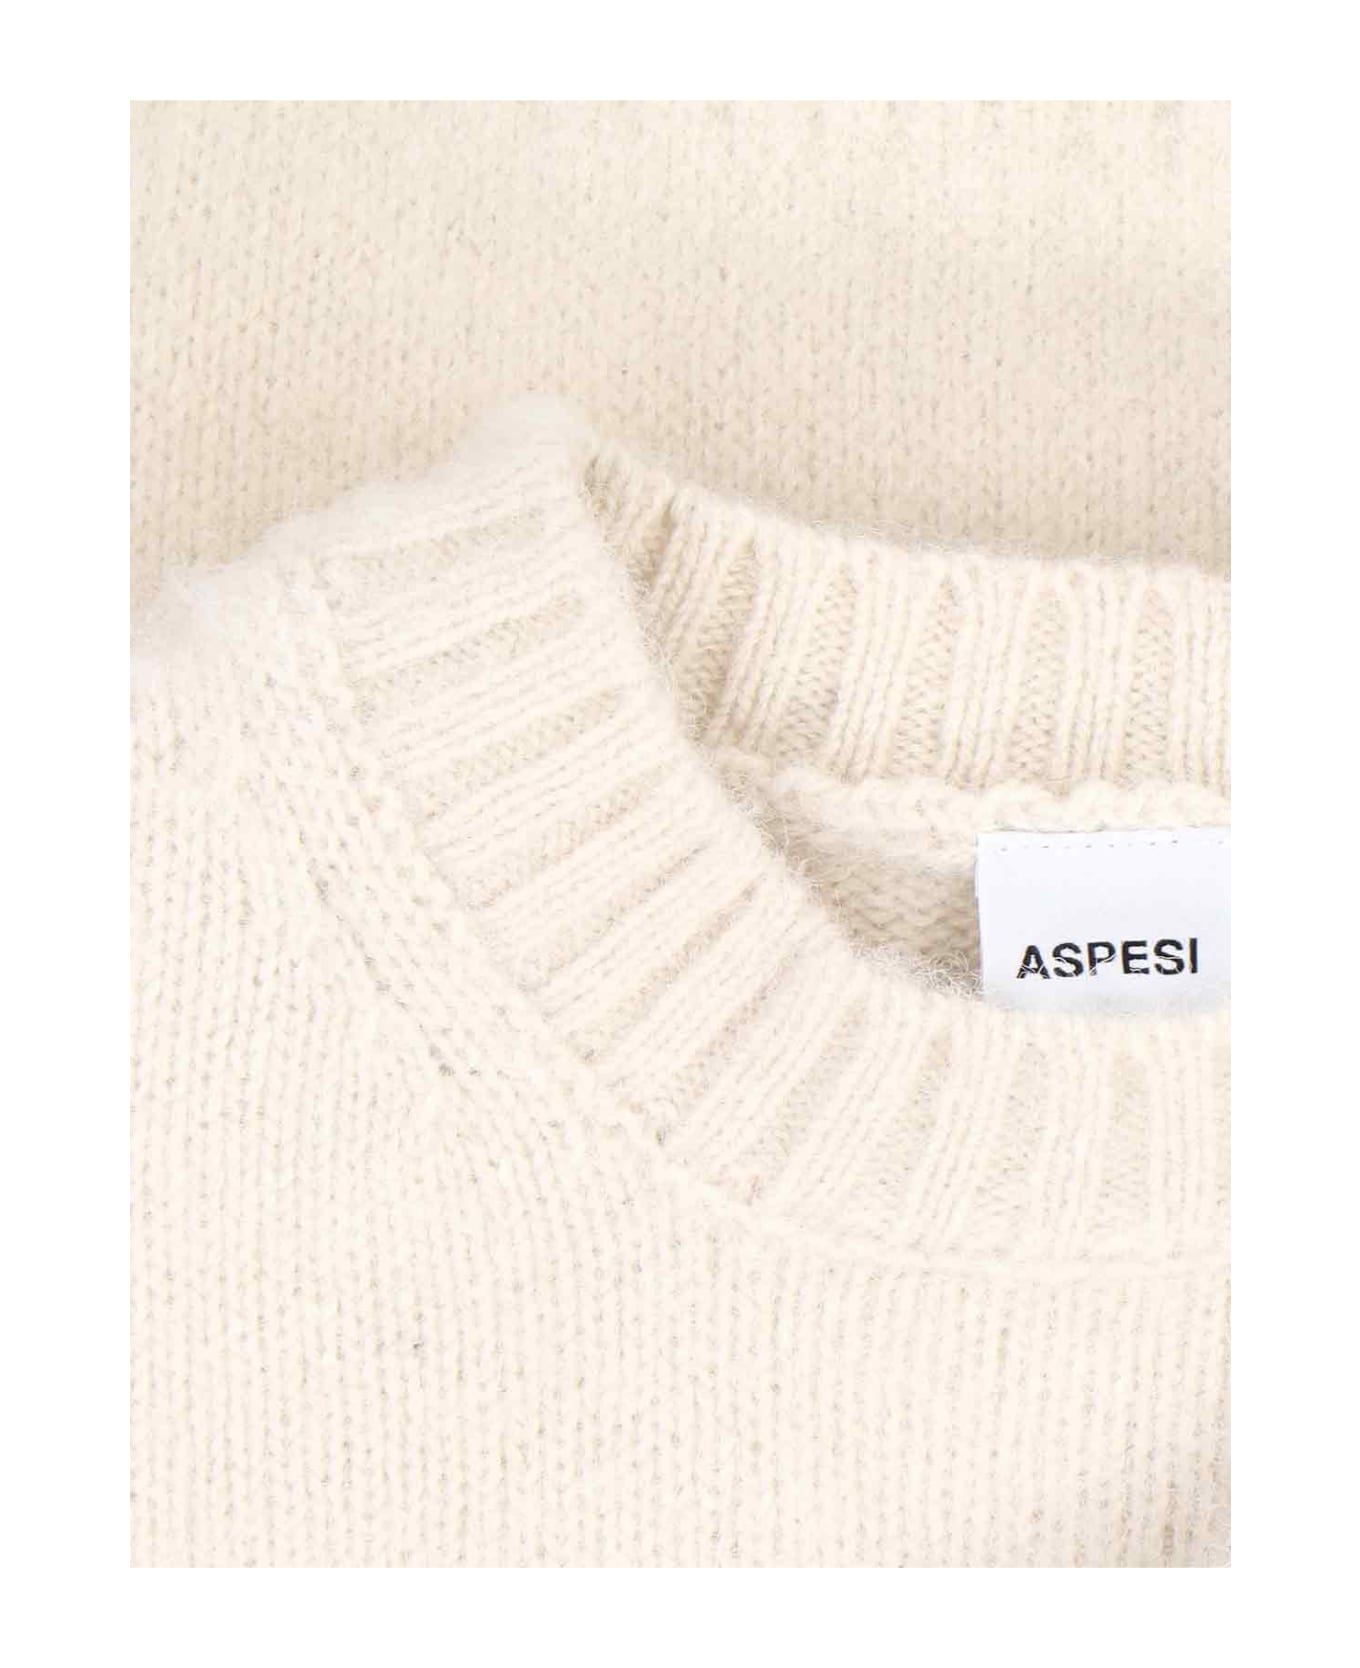 Aspesi 'm183' Sweater - Cream ニットウェア